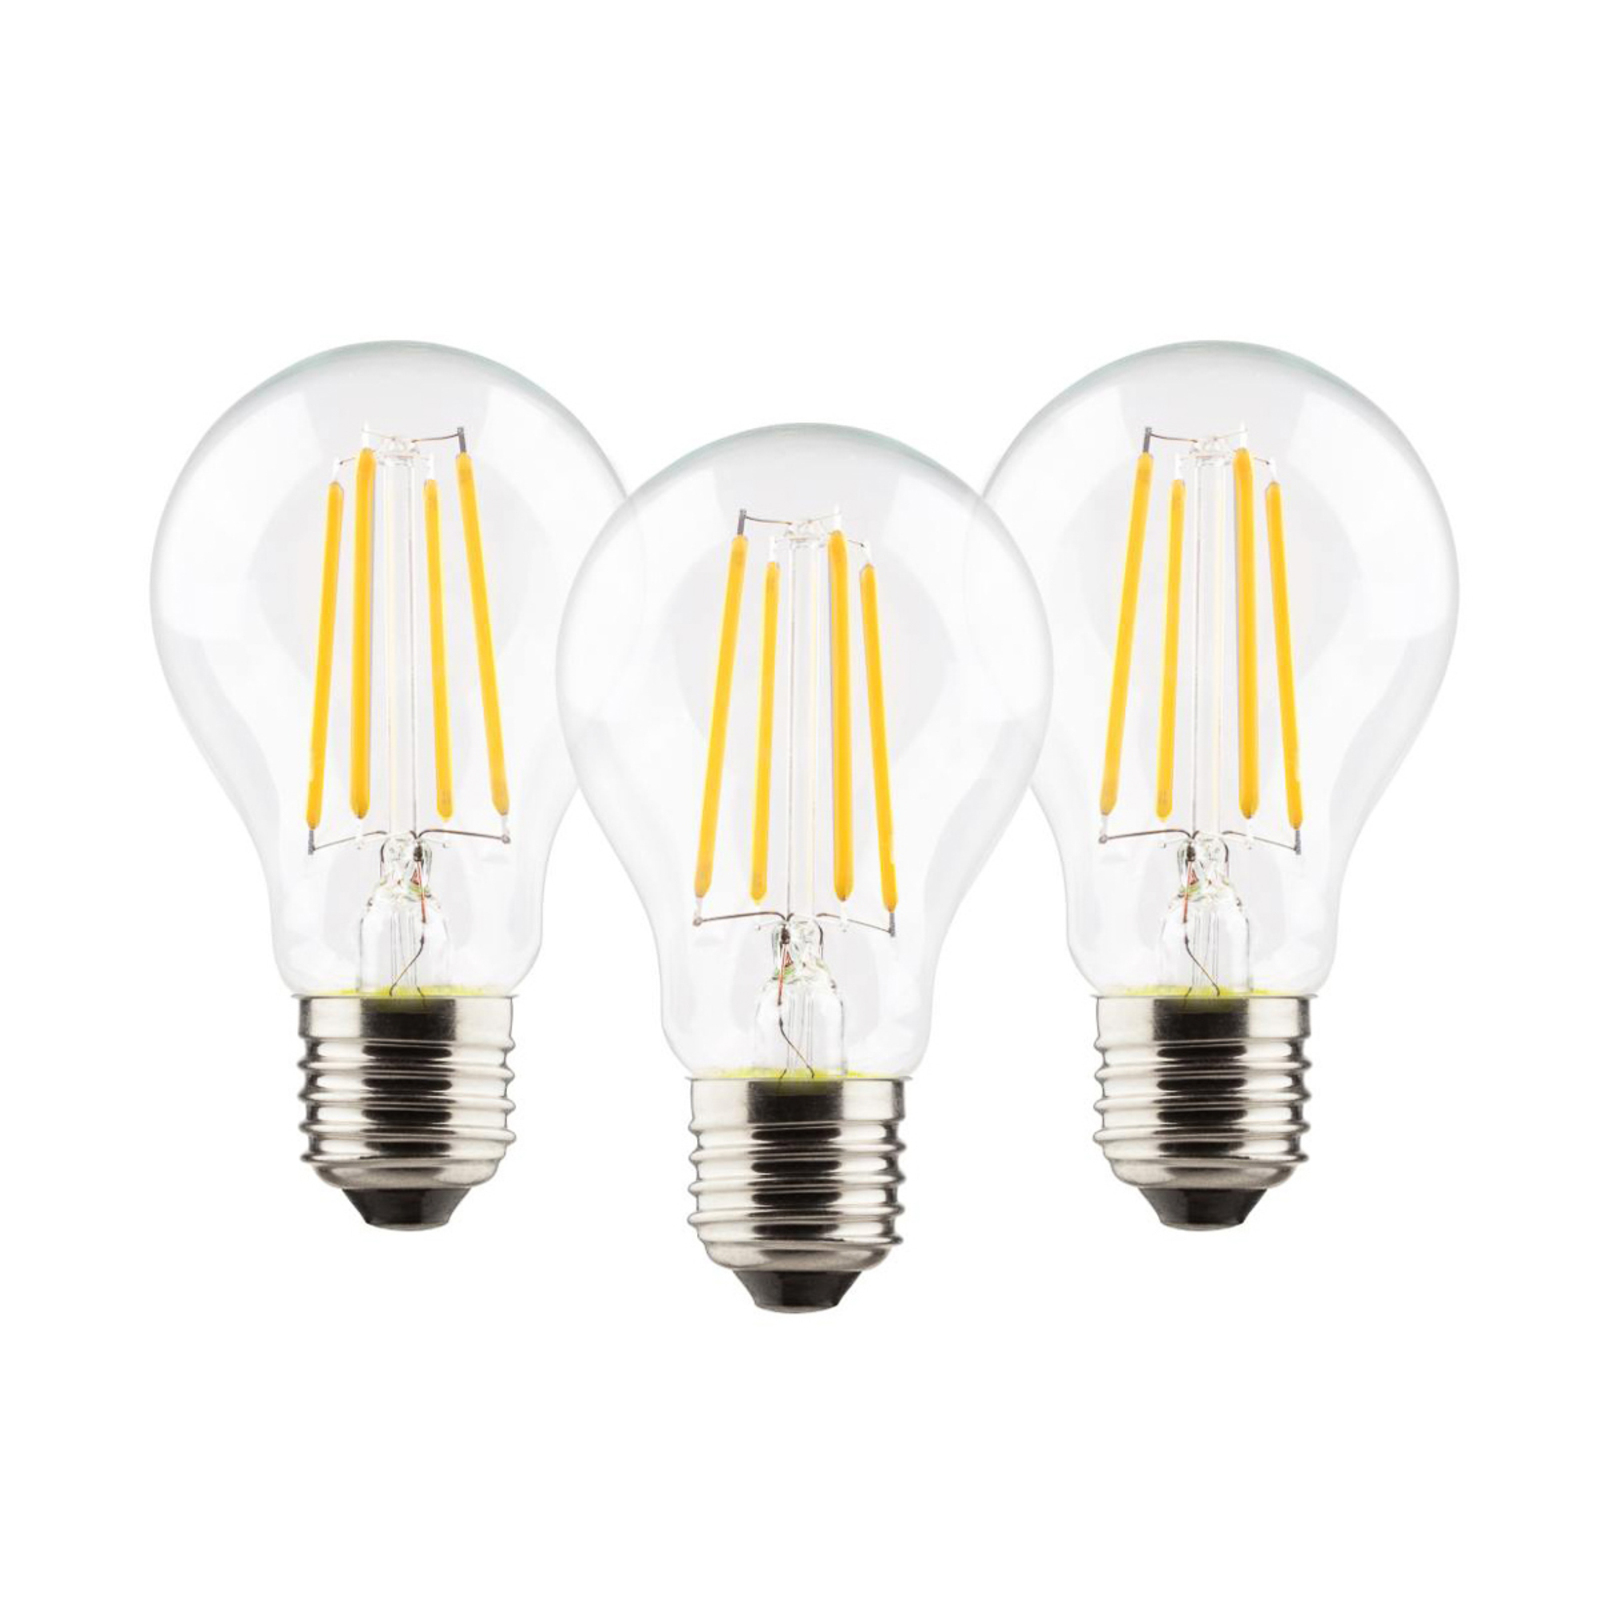 Müller licht LED lamp E27 7W 827 filament per 3